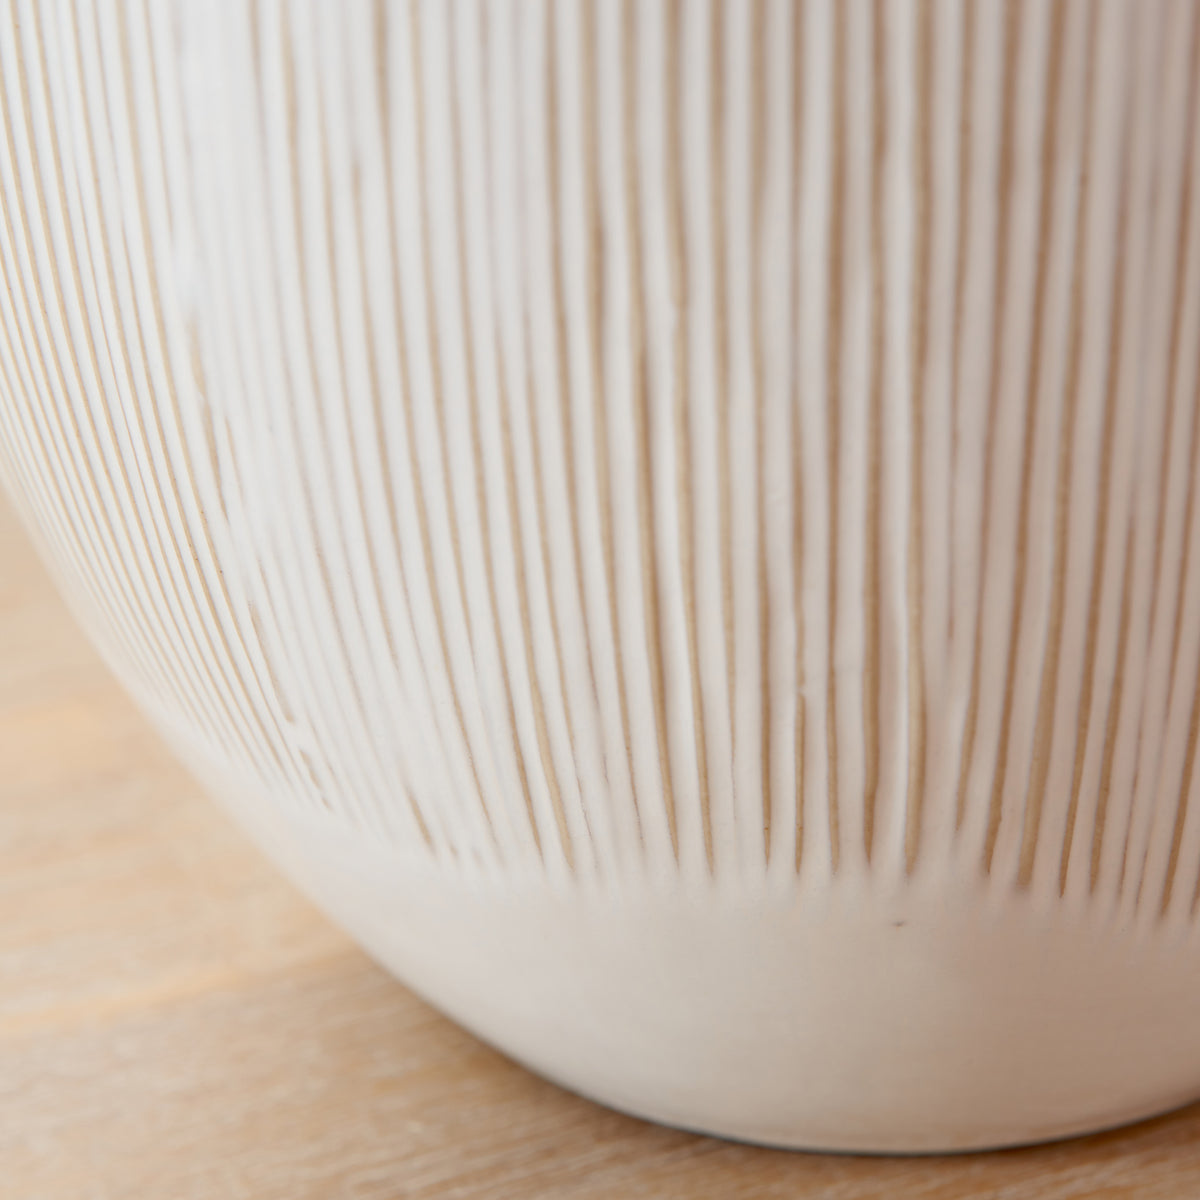 Greta Natural and Cream Textured Ceramic Table Lamp